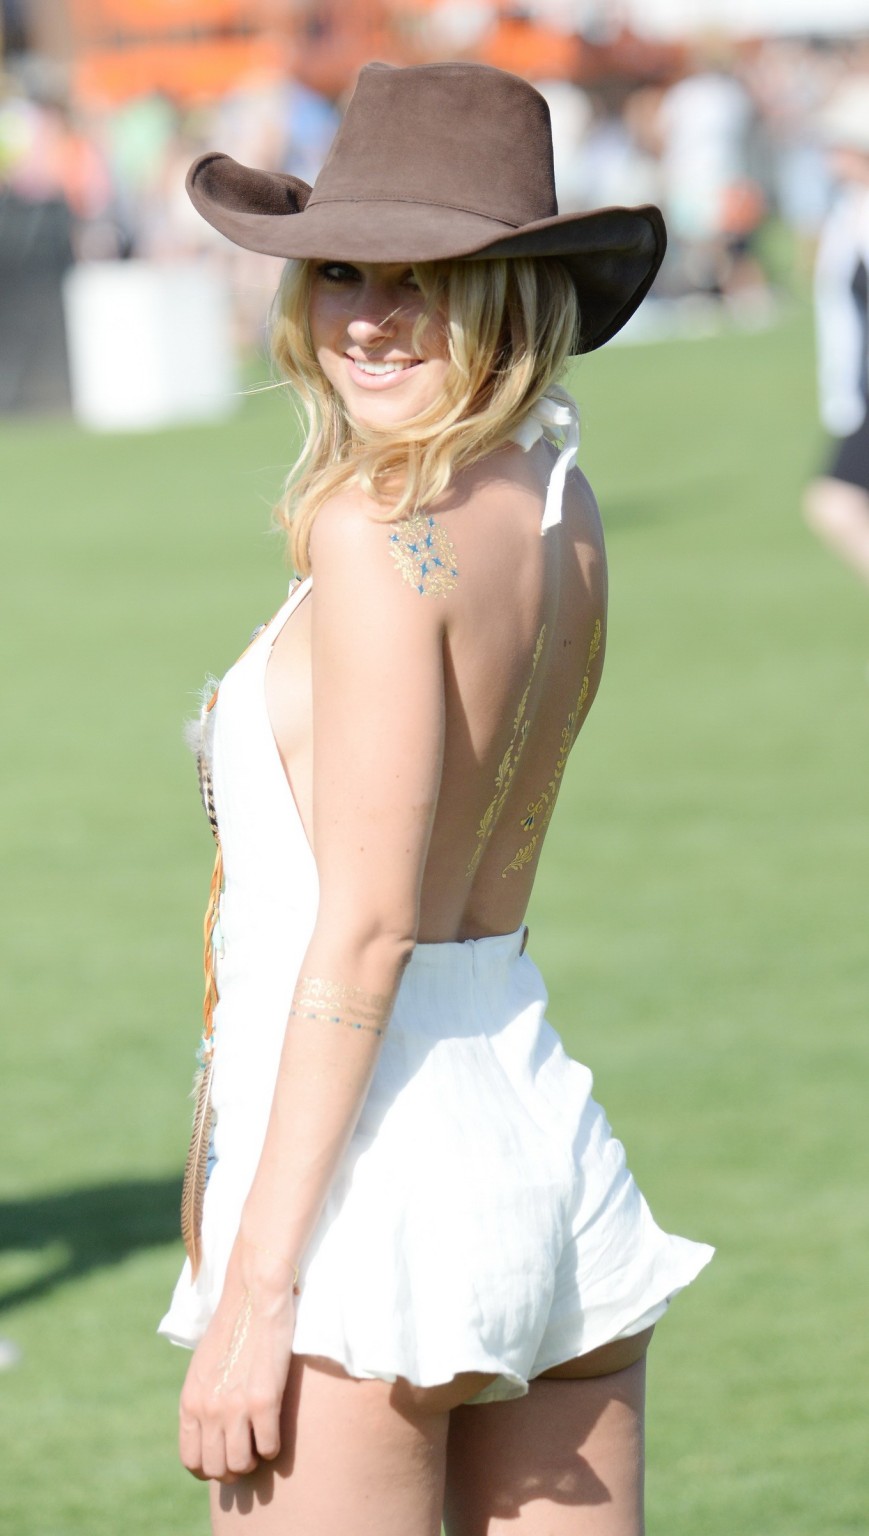 Kimberley Garner panty peek and sideboob action in white mini dress at Coachella #75167518